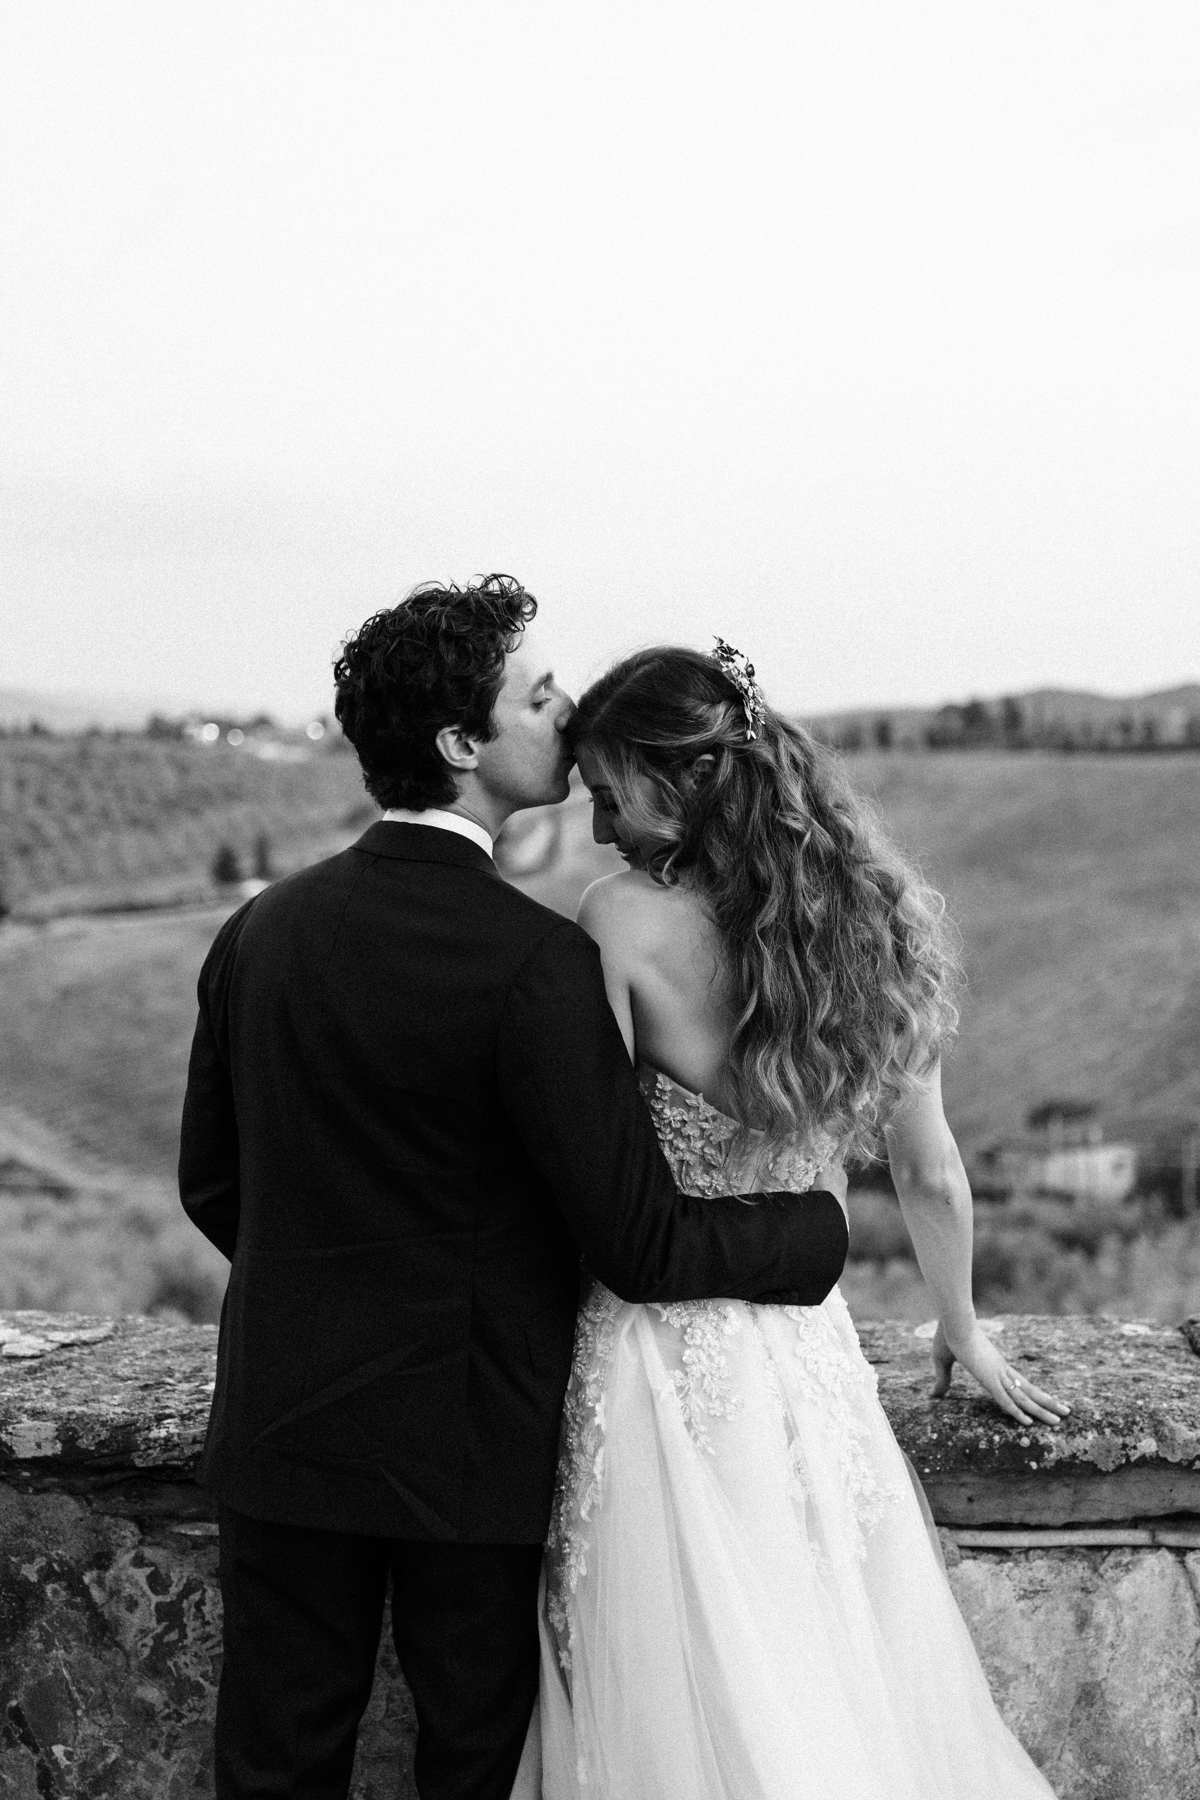 https://malagoliwedding.com/wp-content/uploads/2021/12/Wedding_photographer_villa_corsini_florence-290.jpg